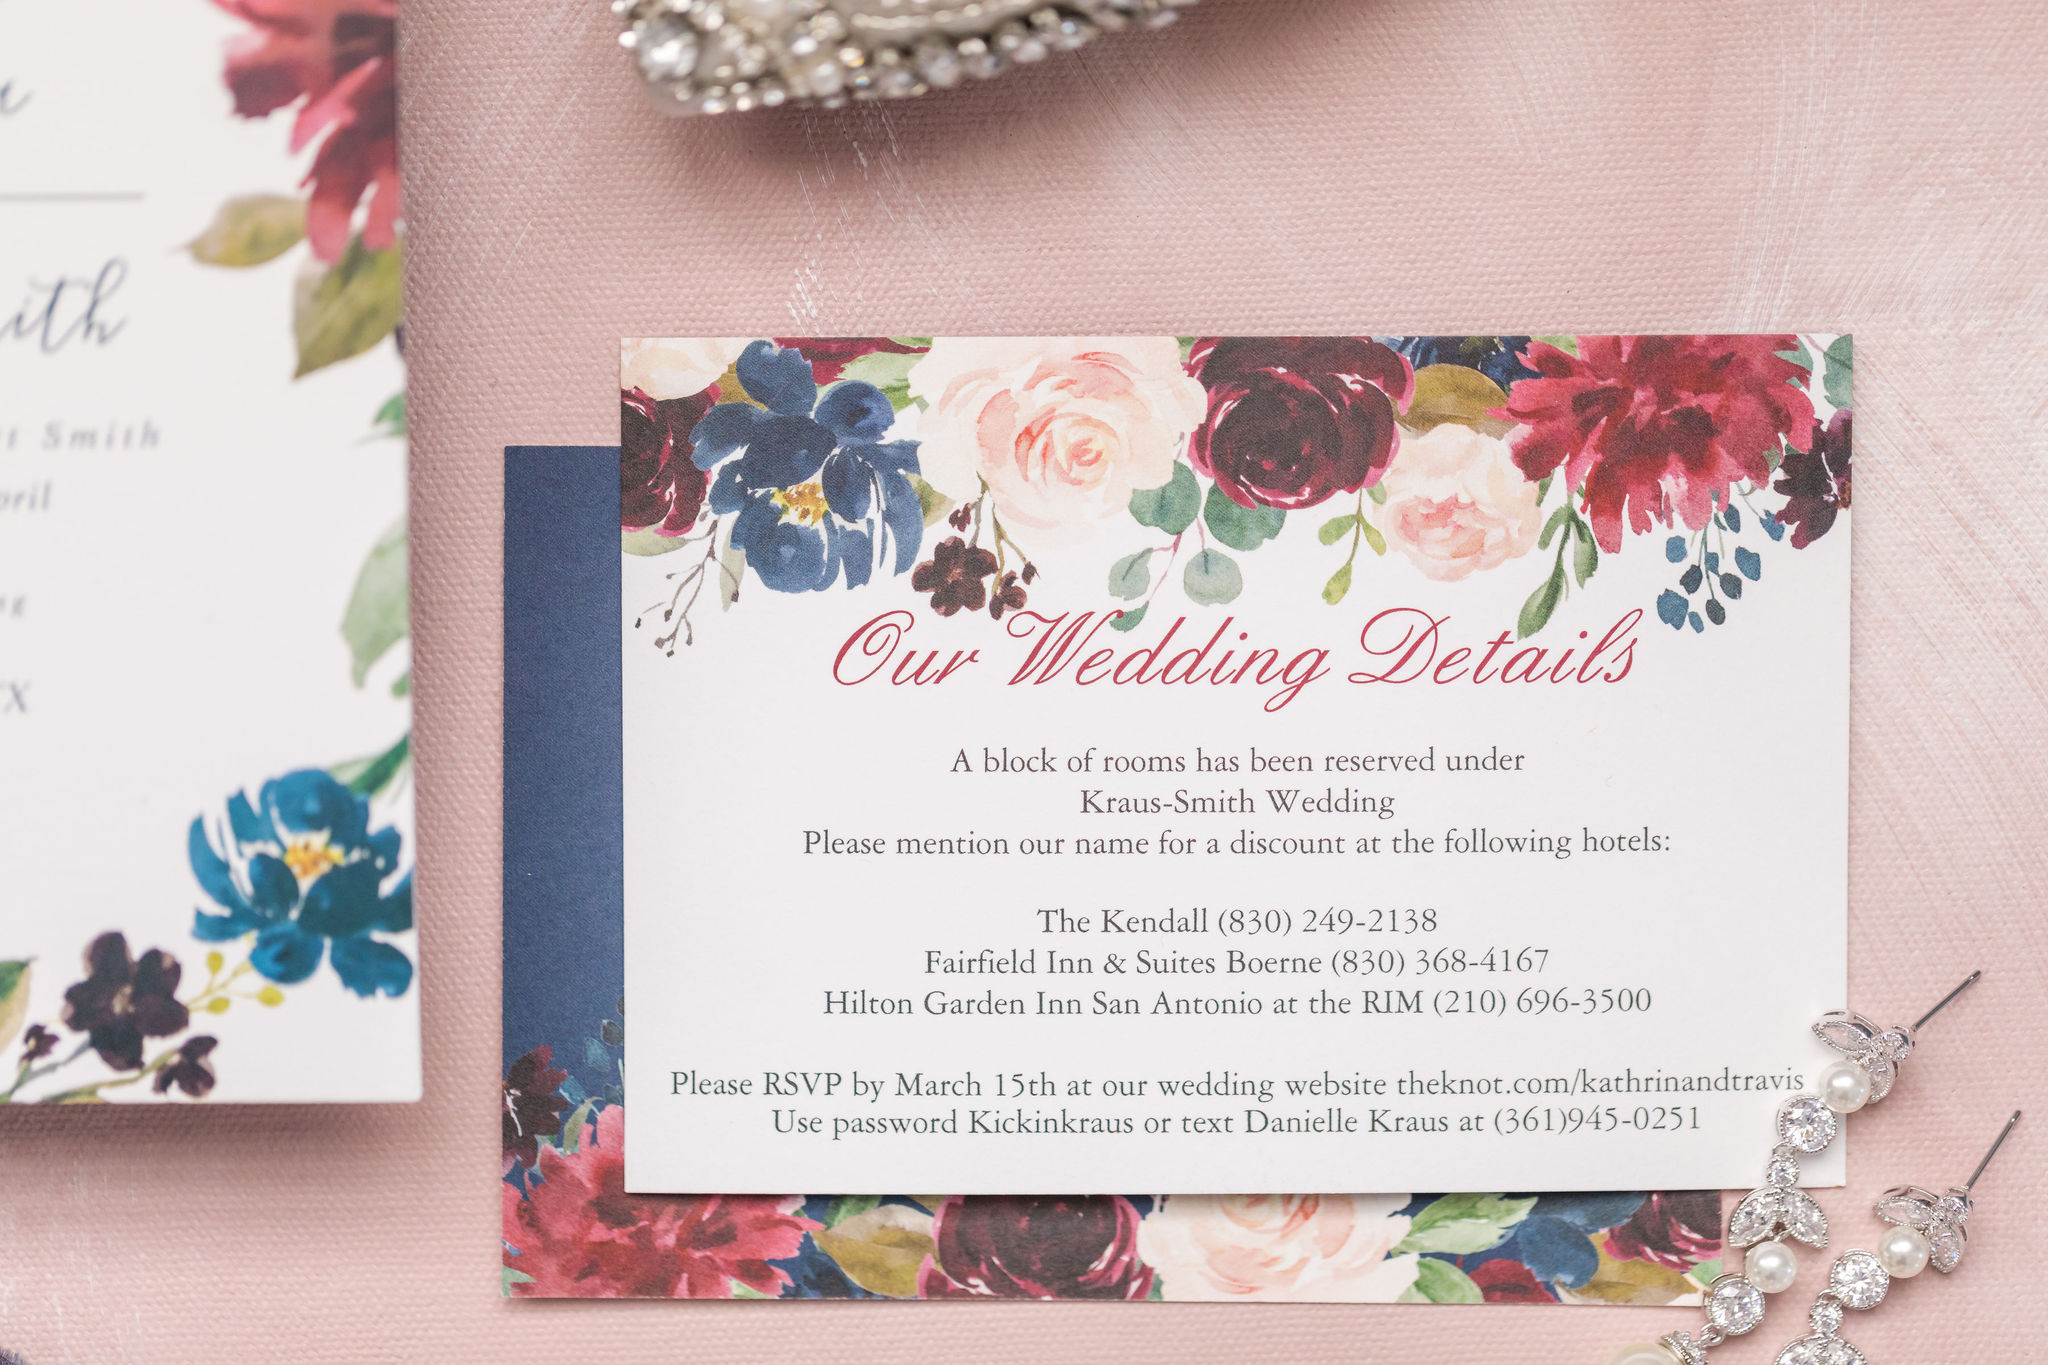 Katherine and Travis' burgundy, blush, and navy wedding invitations